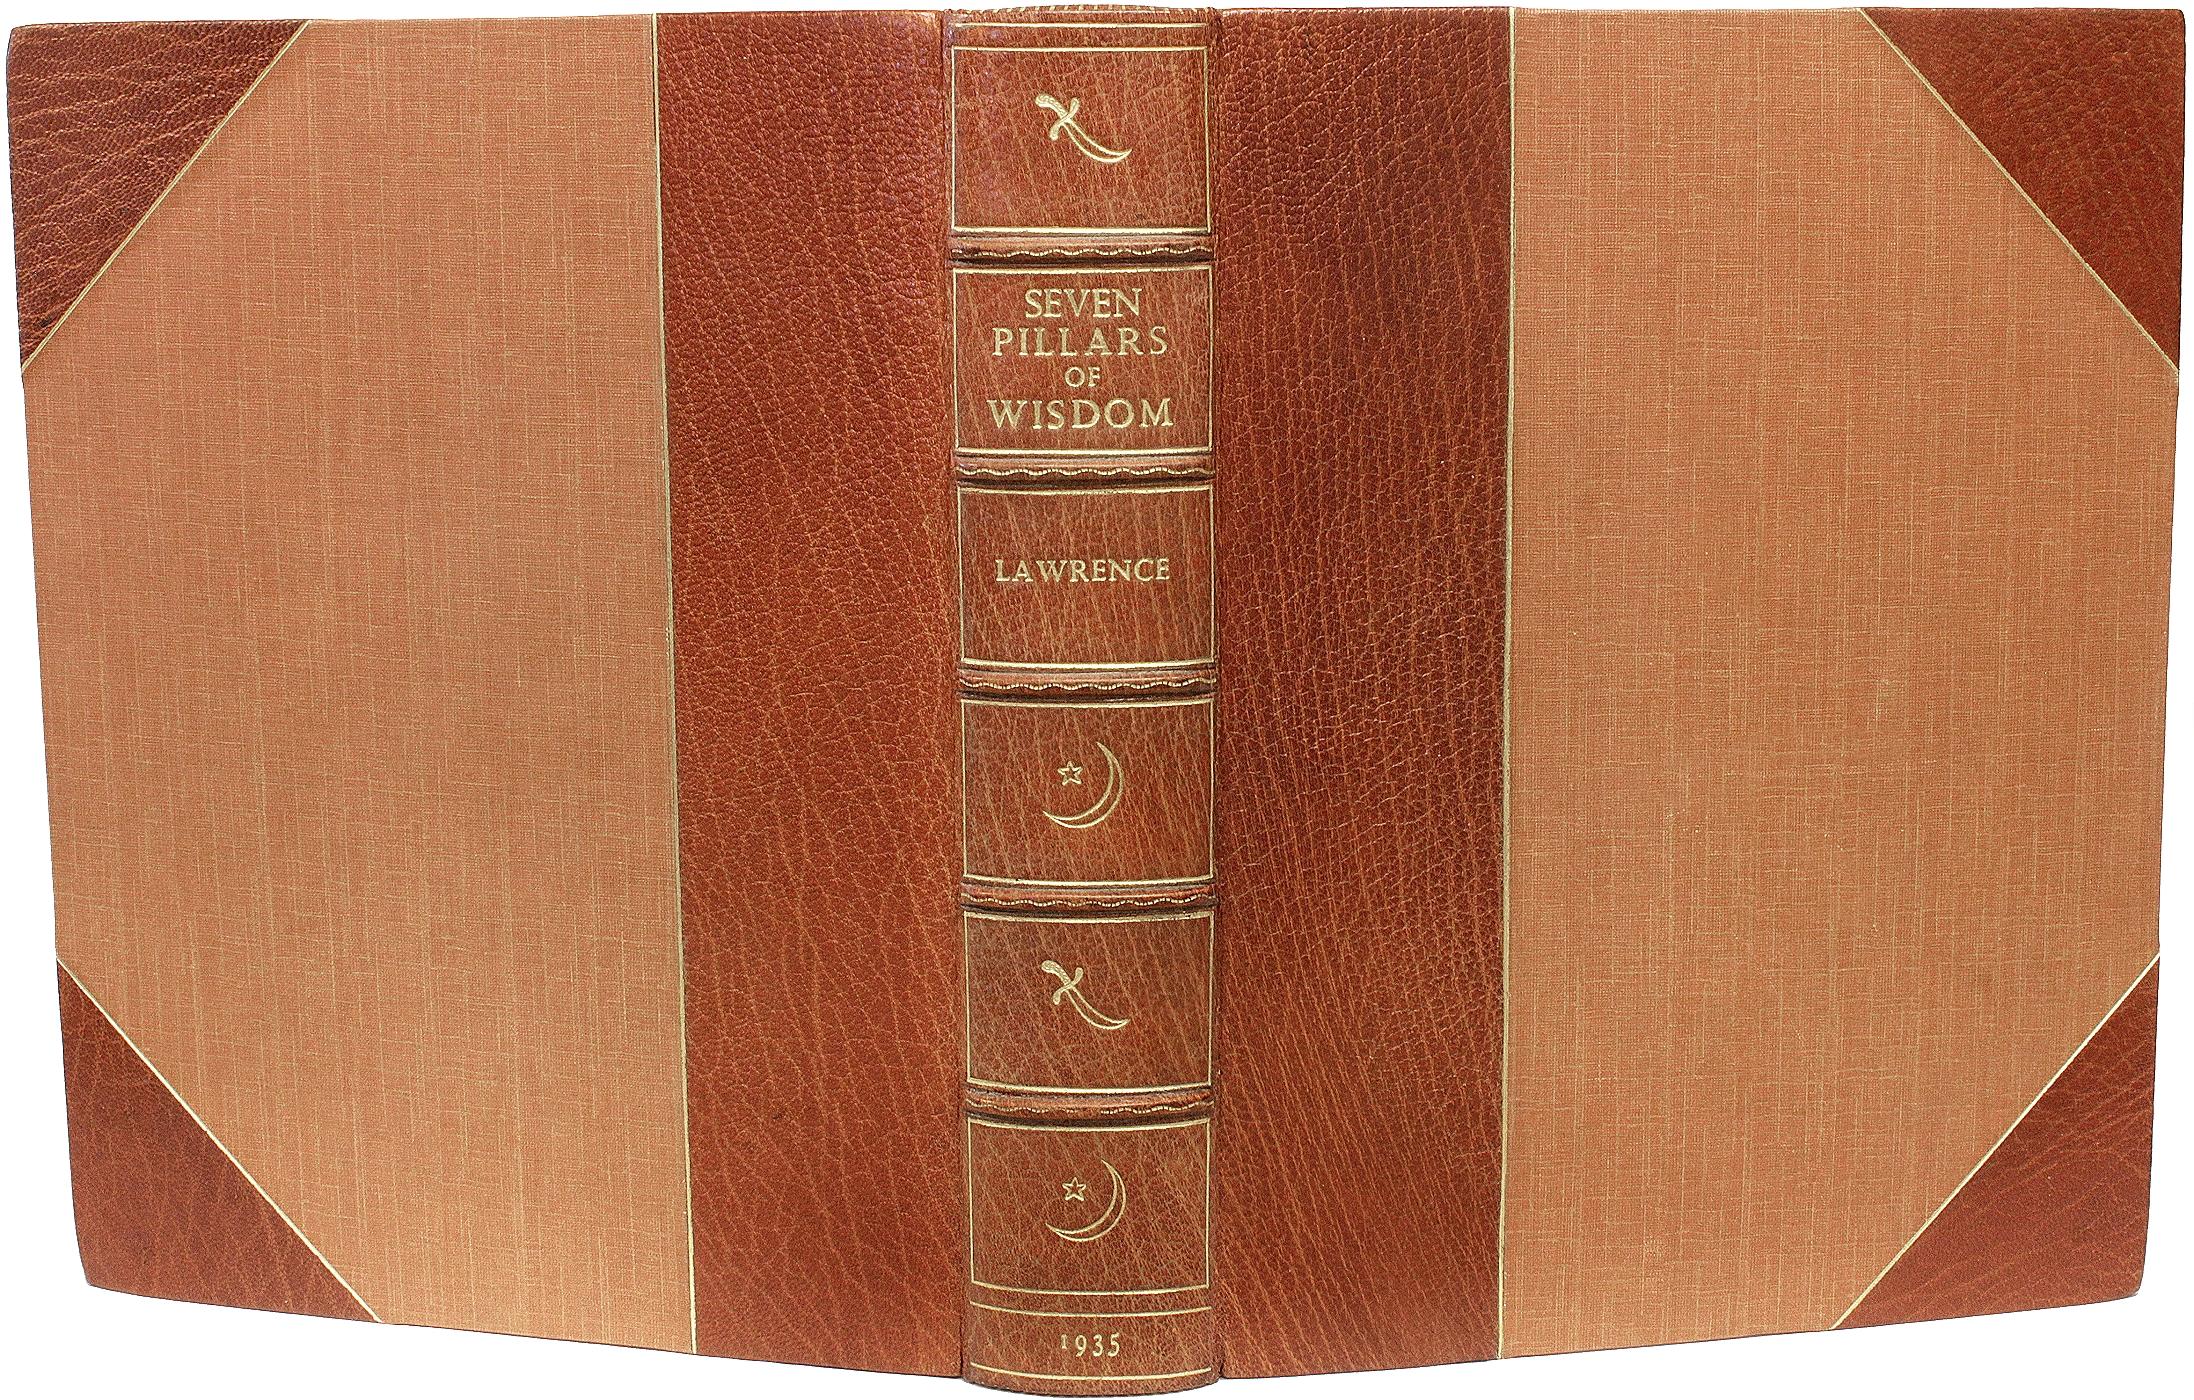 AUTHOR: LAWRENCE, T. E. 

TITLE: Seven Pillars Of Wisdom. A Triumph.

PUBLISHER: London: Jonathan Cape, 1935.

DESCRIPTION: FIRST TRADE EDITION. 1 vol., 4to., 10